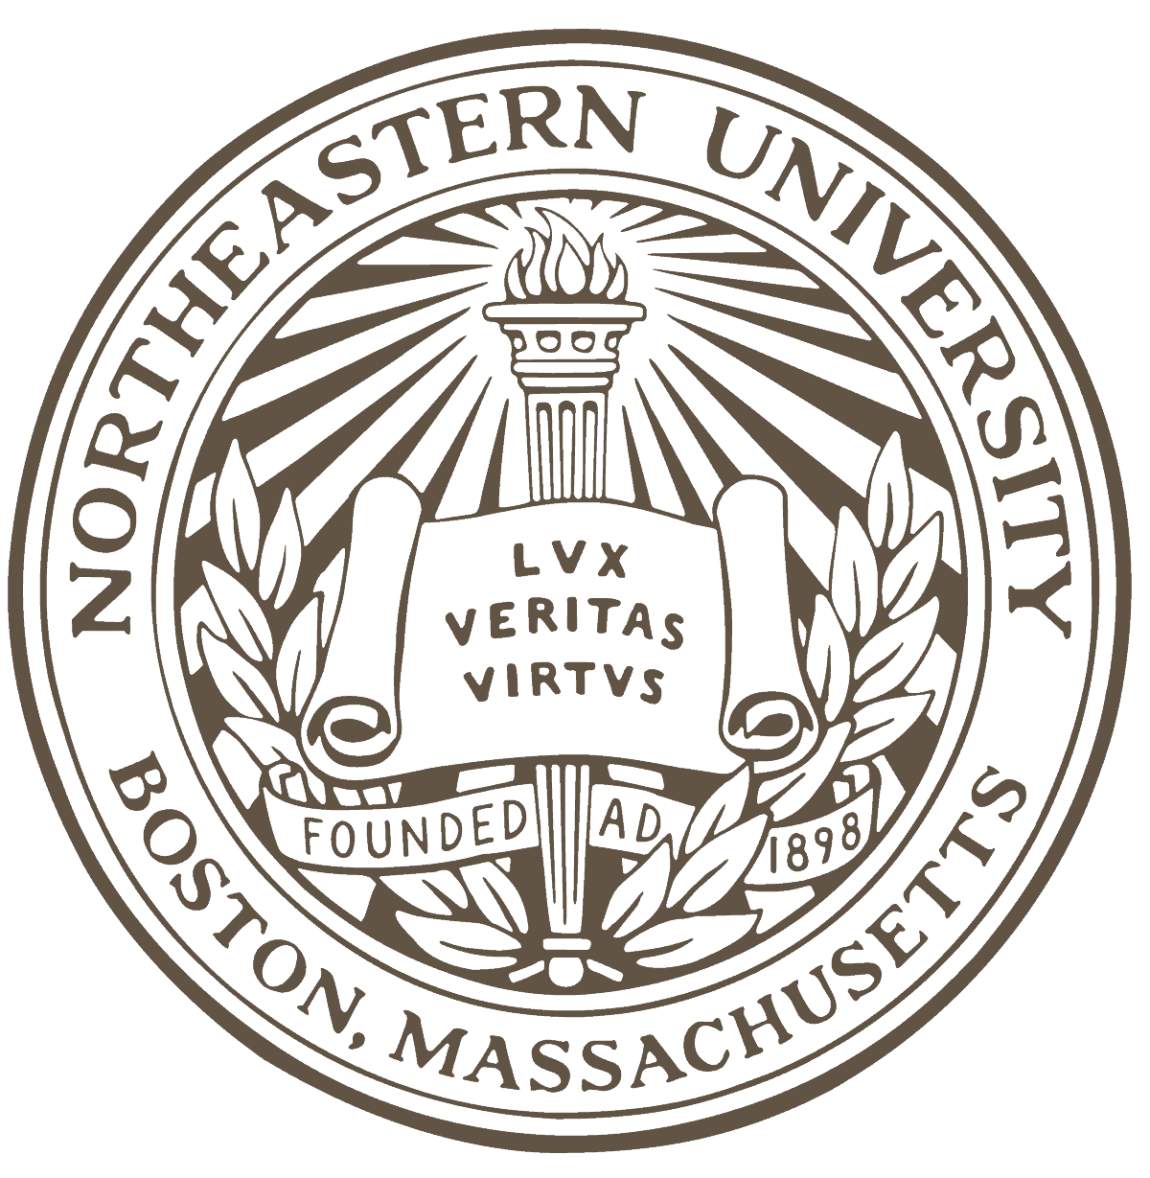 Northeastern University FREEYORK